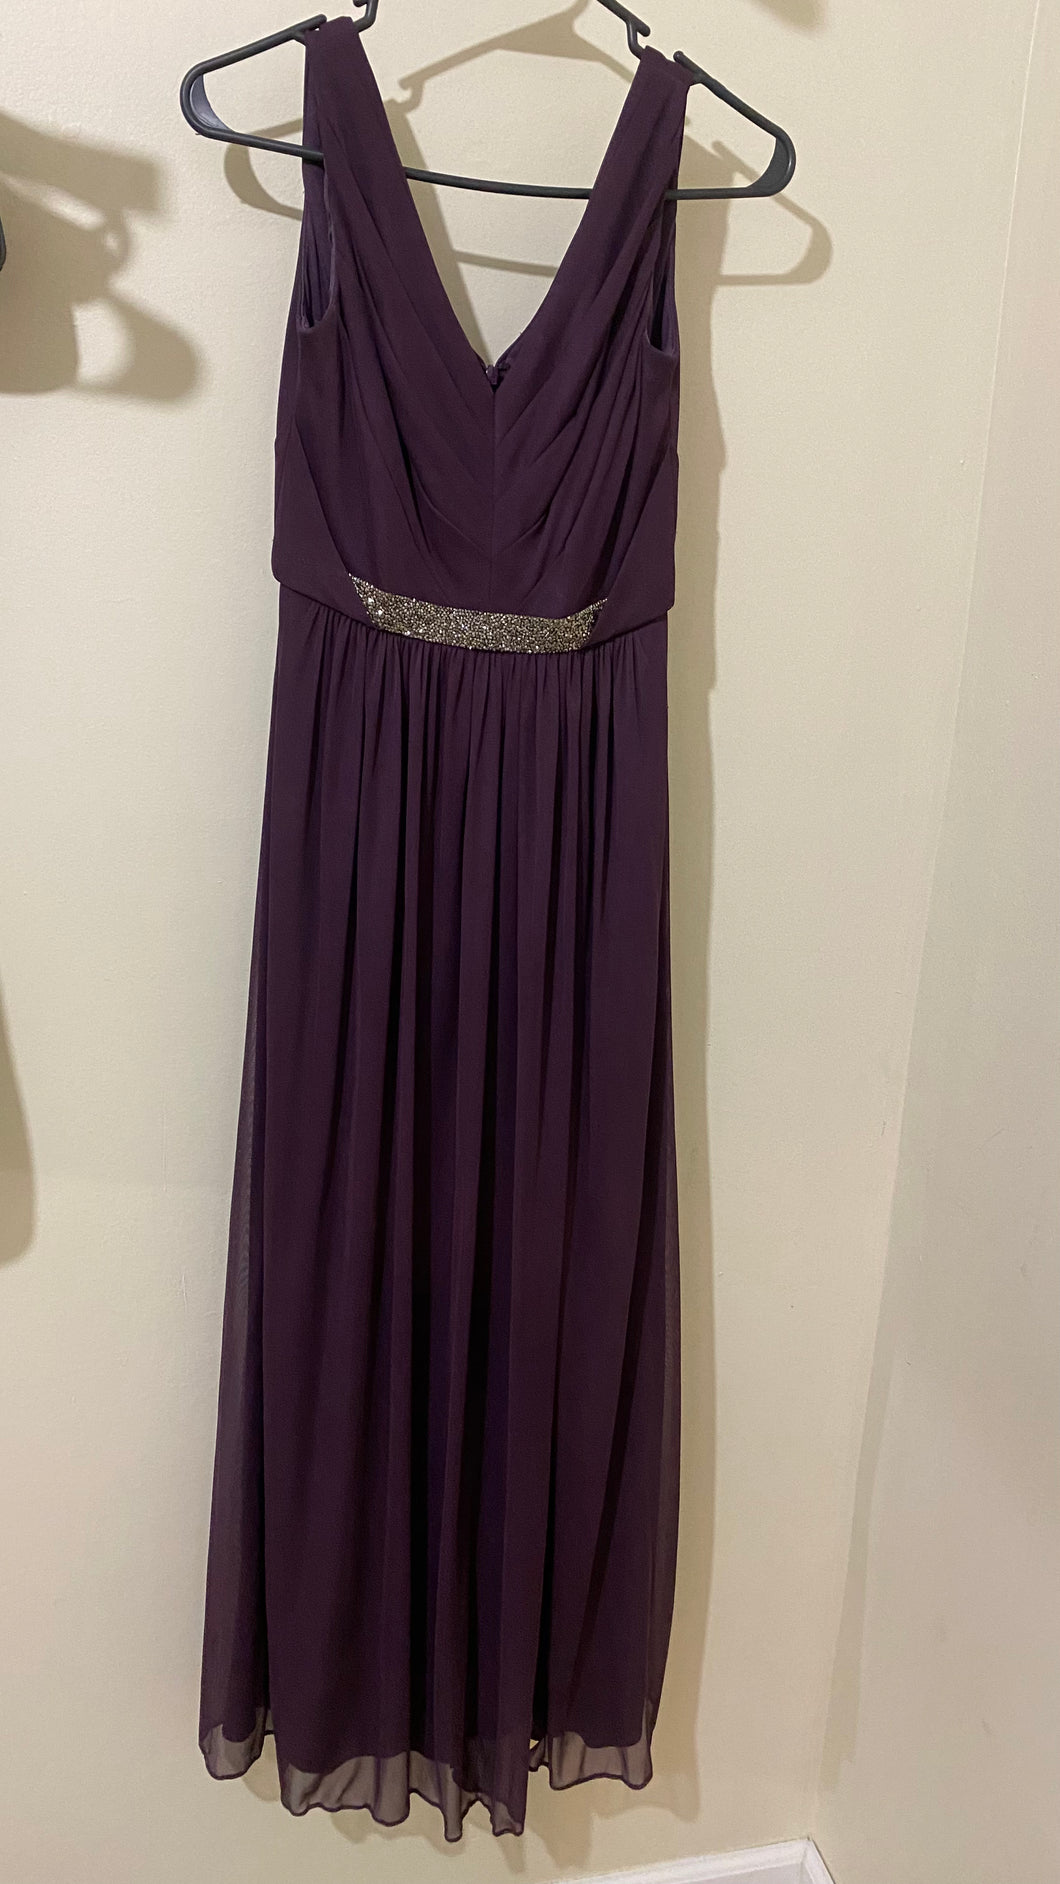 SHAR200-X Plum Purple Bridesmaid Gown. Size 2